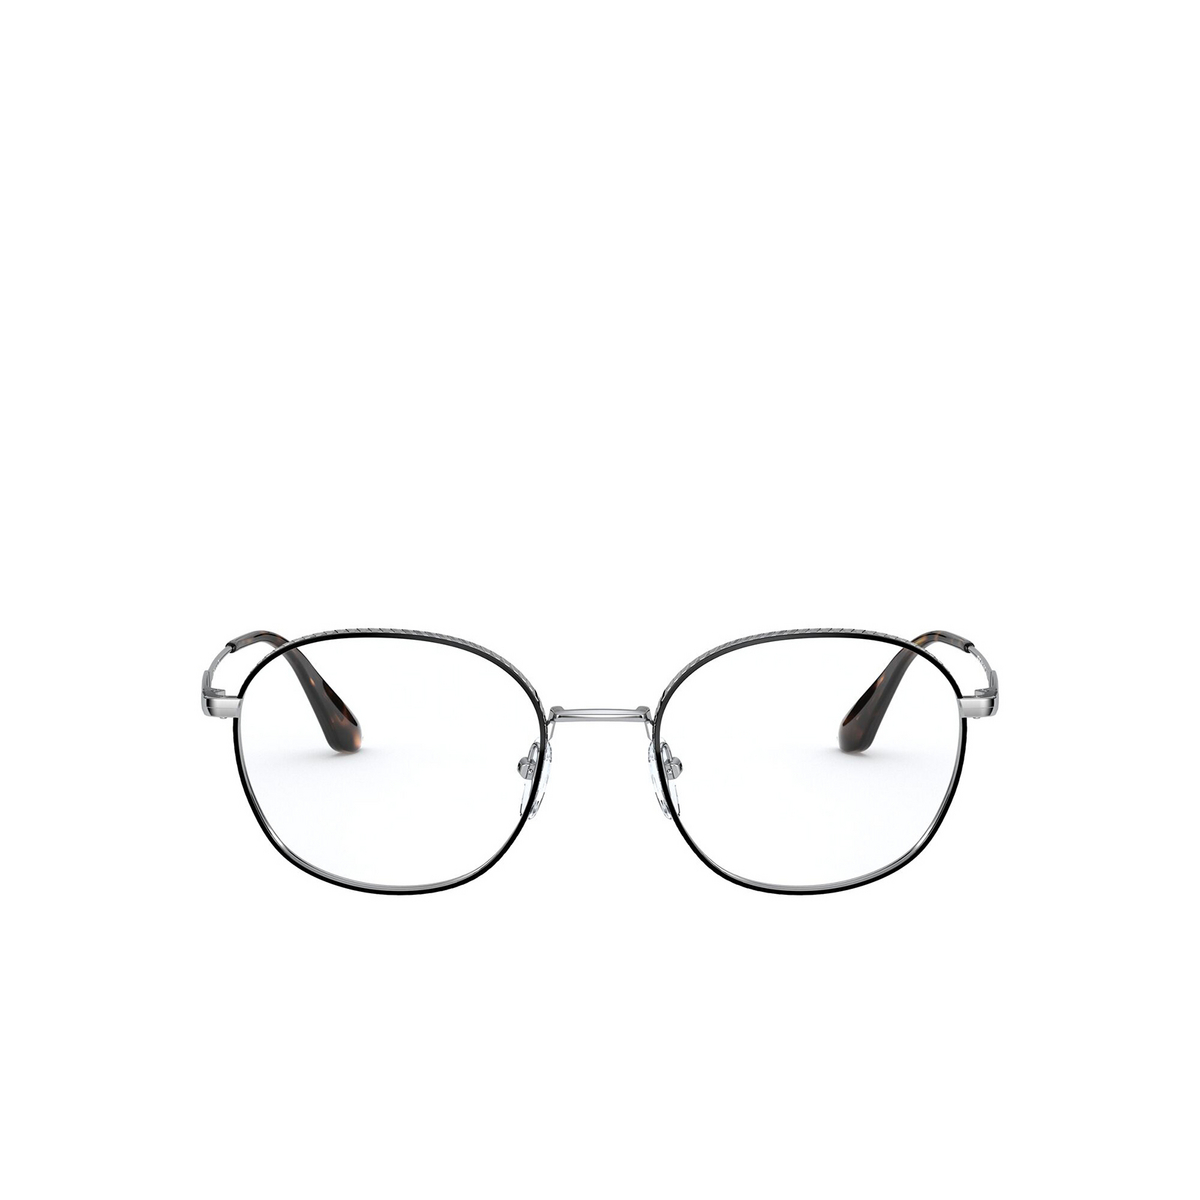 Prada® Square Eyeglasses: PR 53WV color Silver / Black 5241O1 - front view.